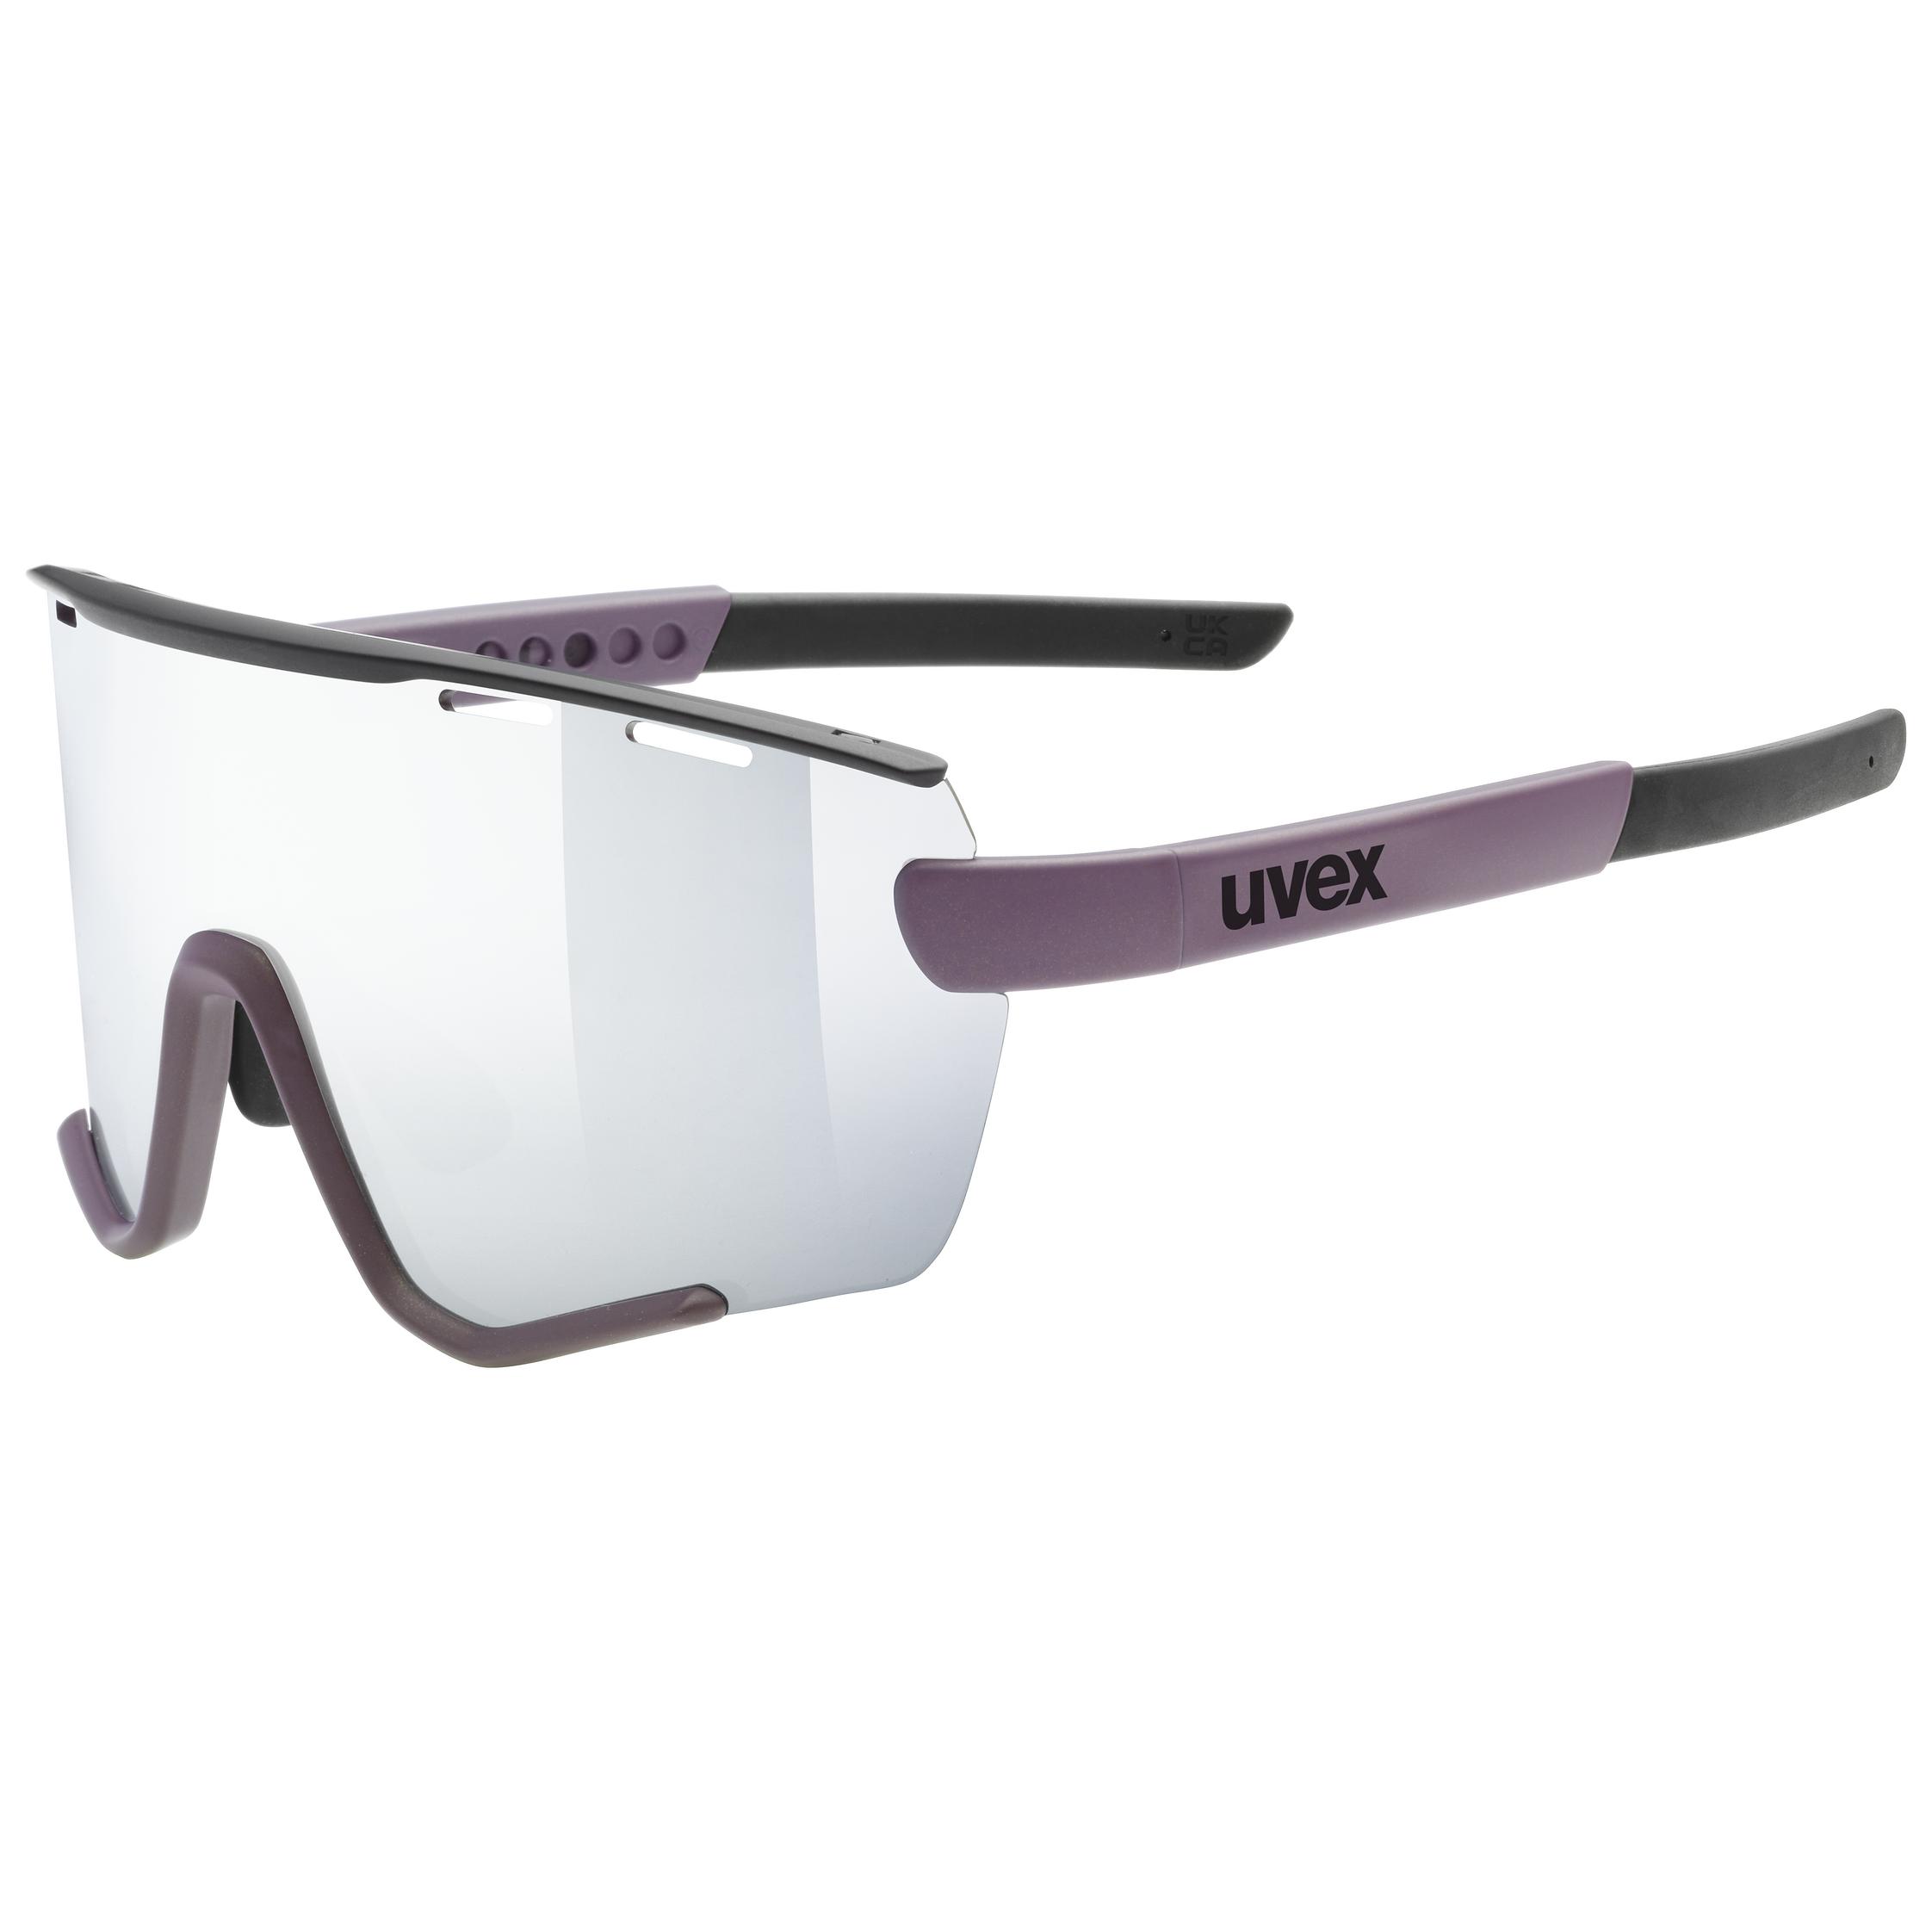 Mountain/Road Bike Clear Lens Cycling Glasses UVEX Anti-Fog  BRAND NEW 